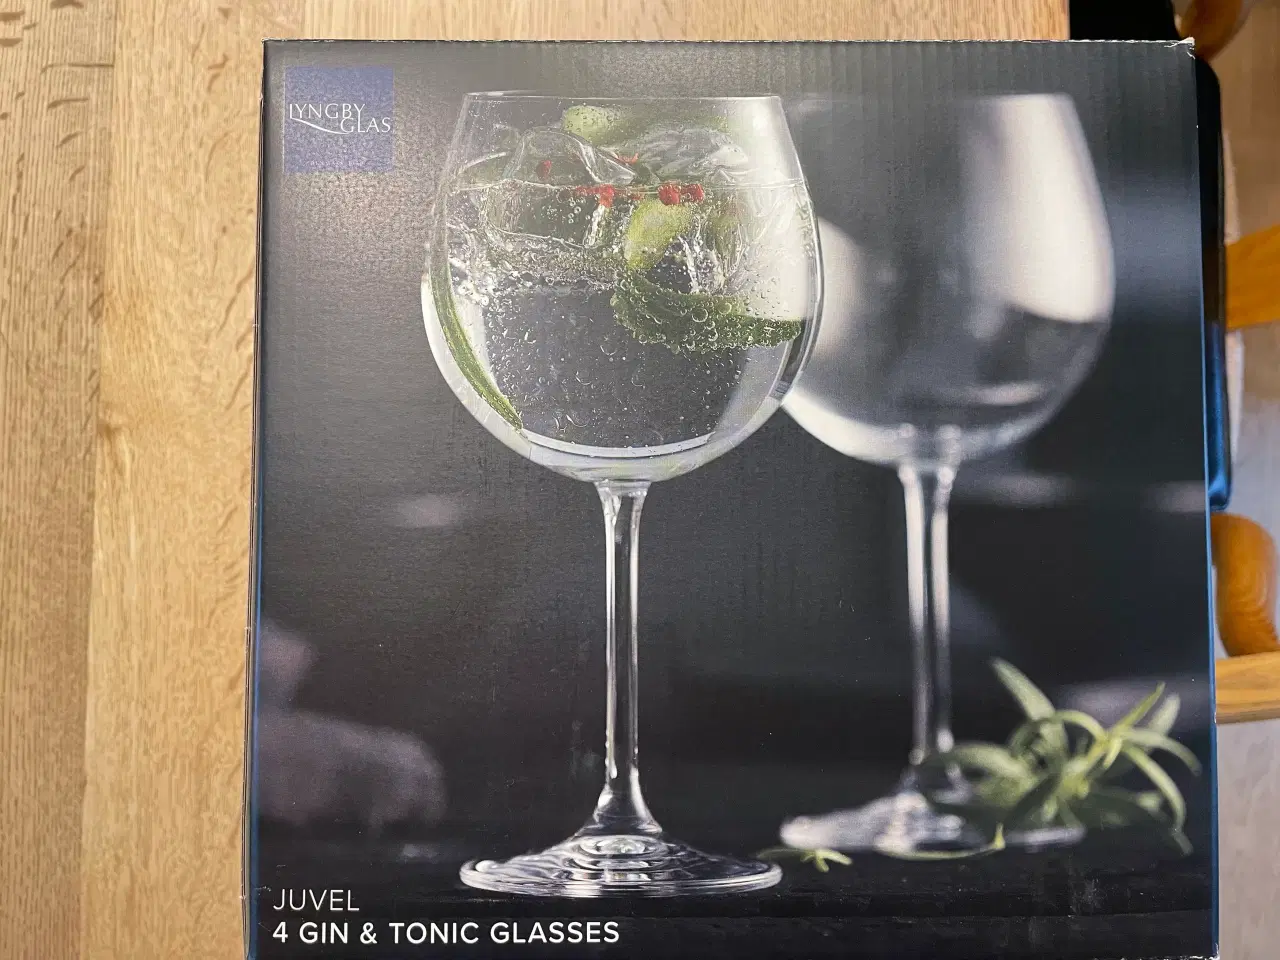 Billede 1 - Lyngby Gin og Tonic glas